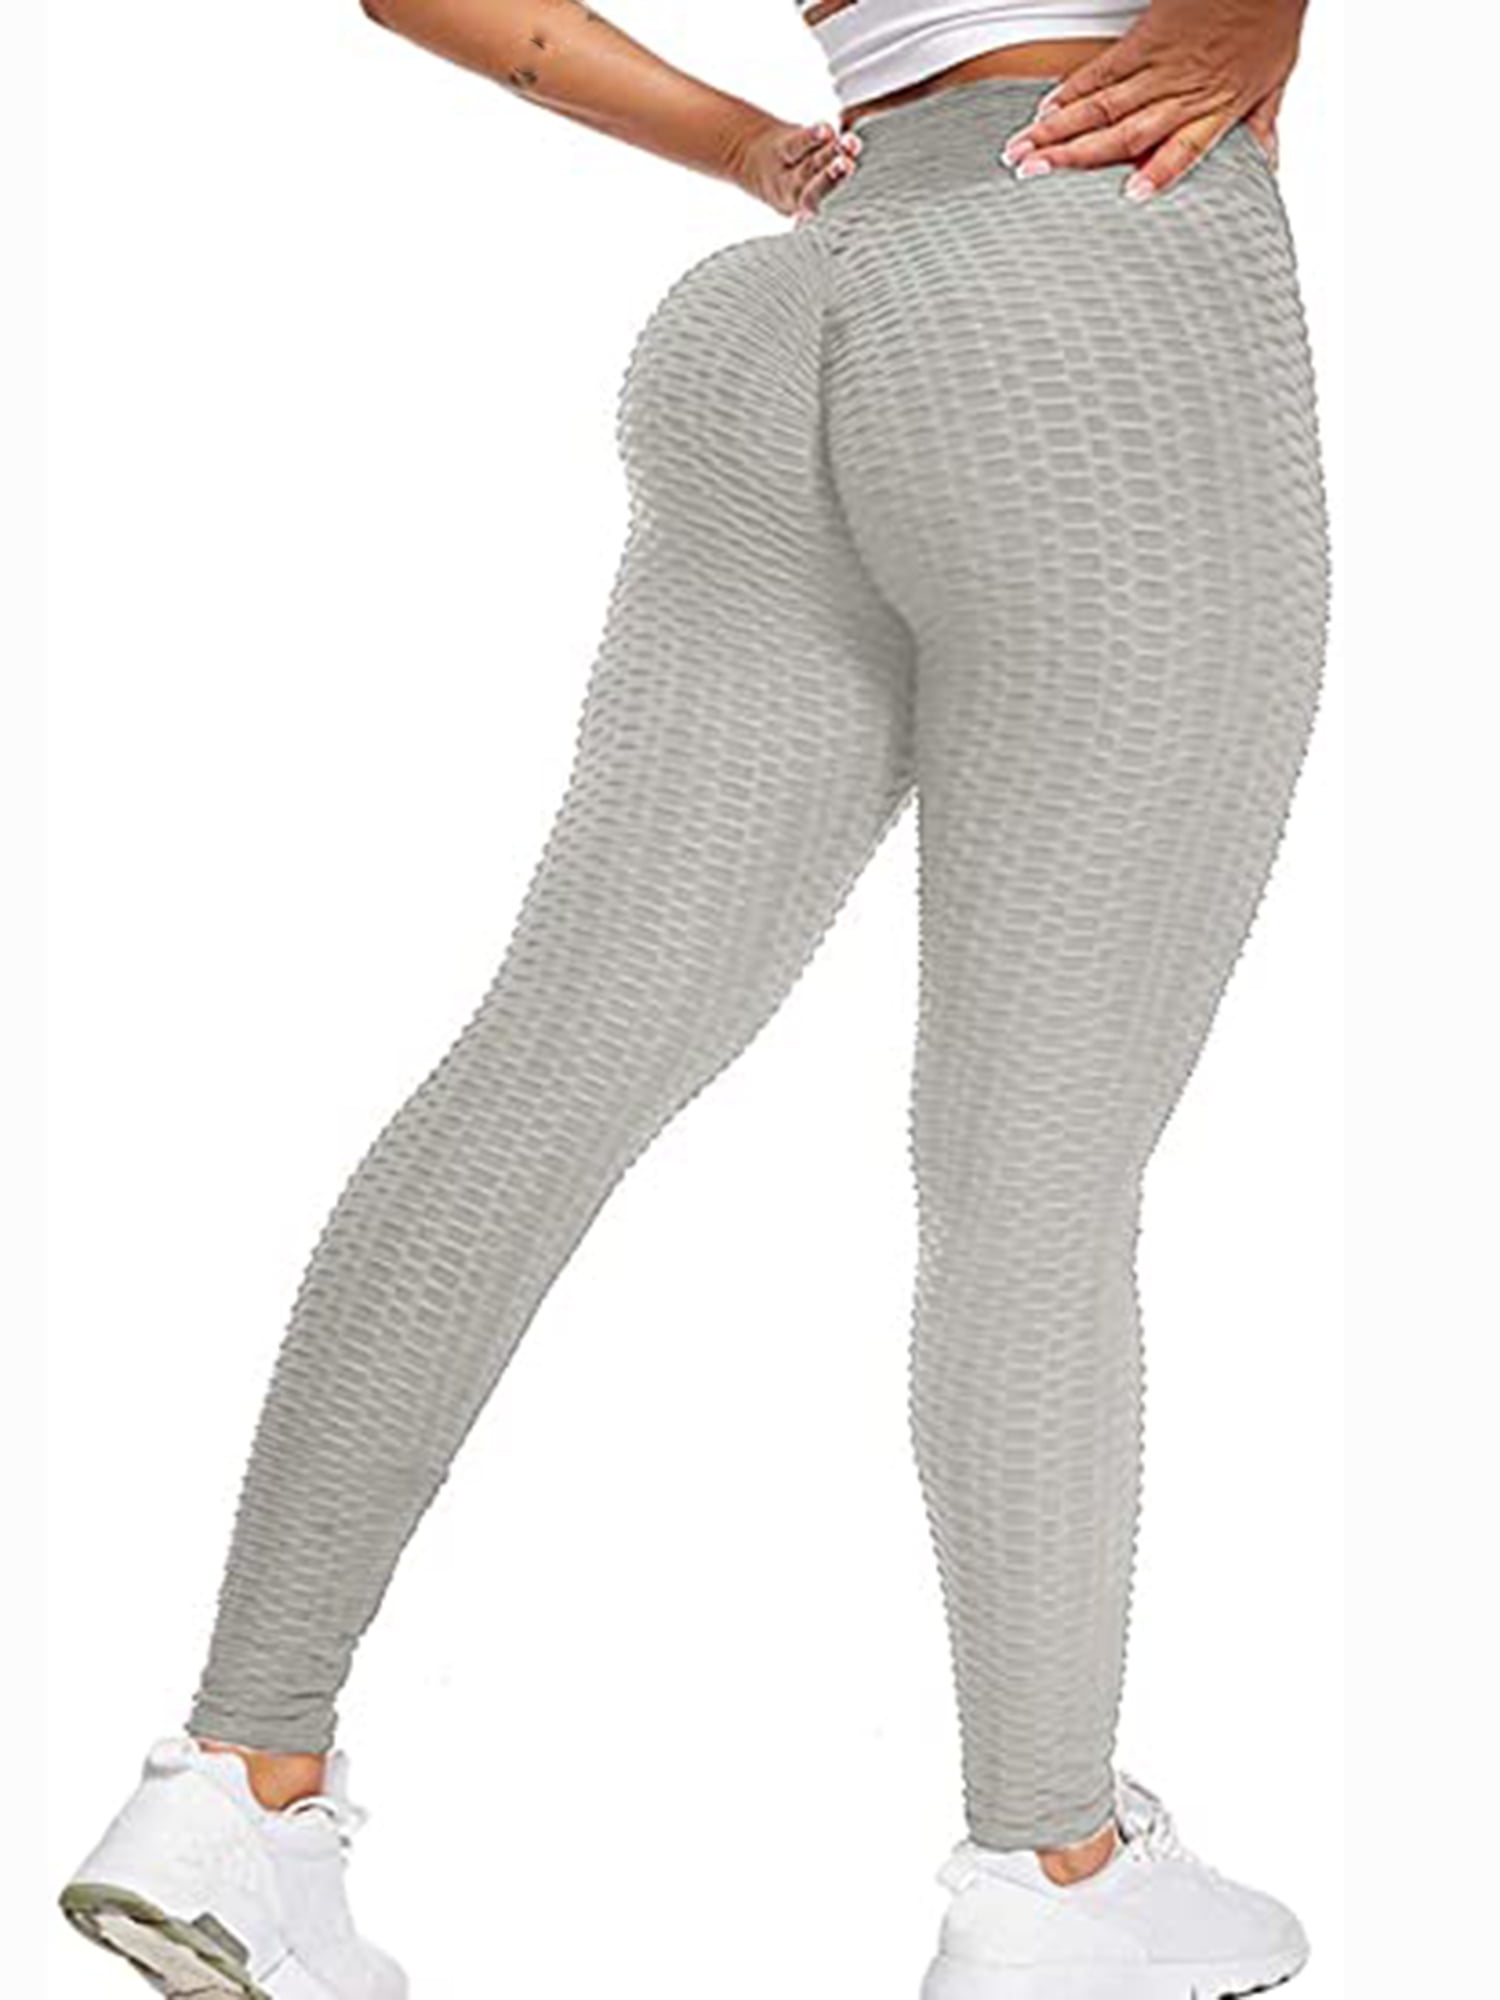 LELINTA Women's High Waist Yoga Pants Textured Ruched Butt Lifting